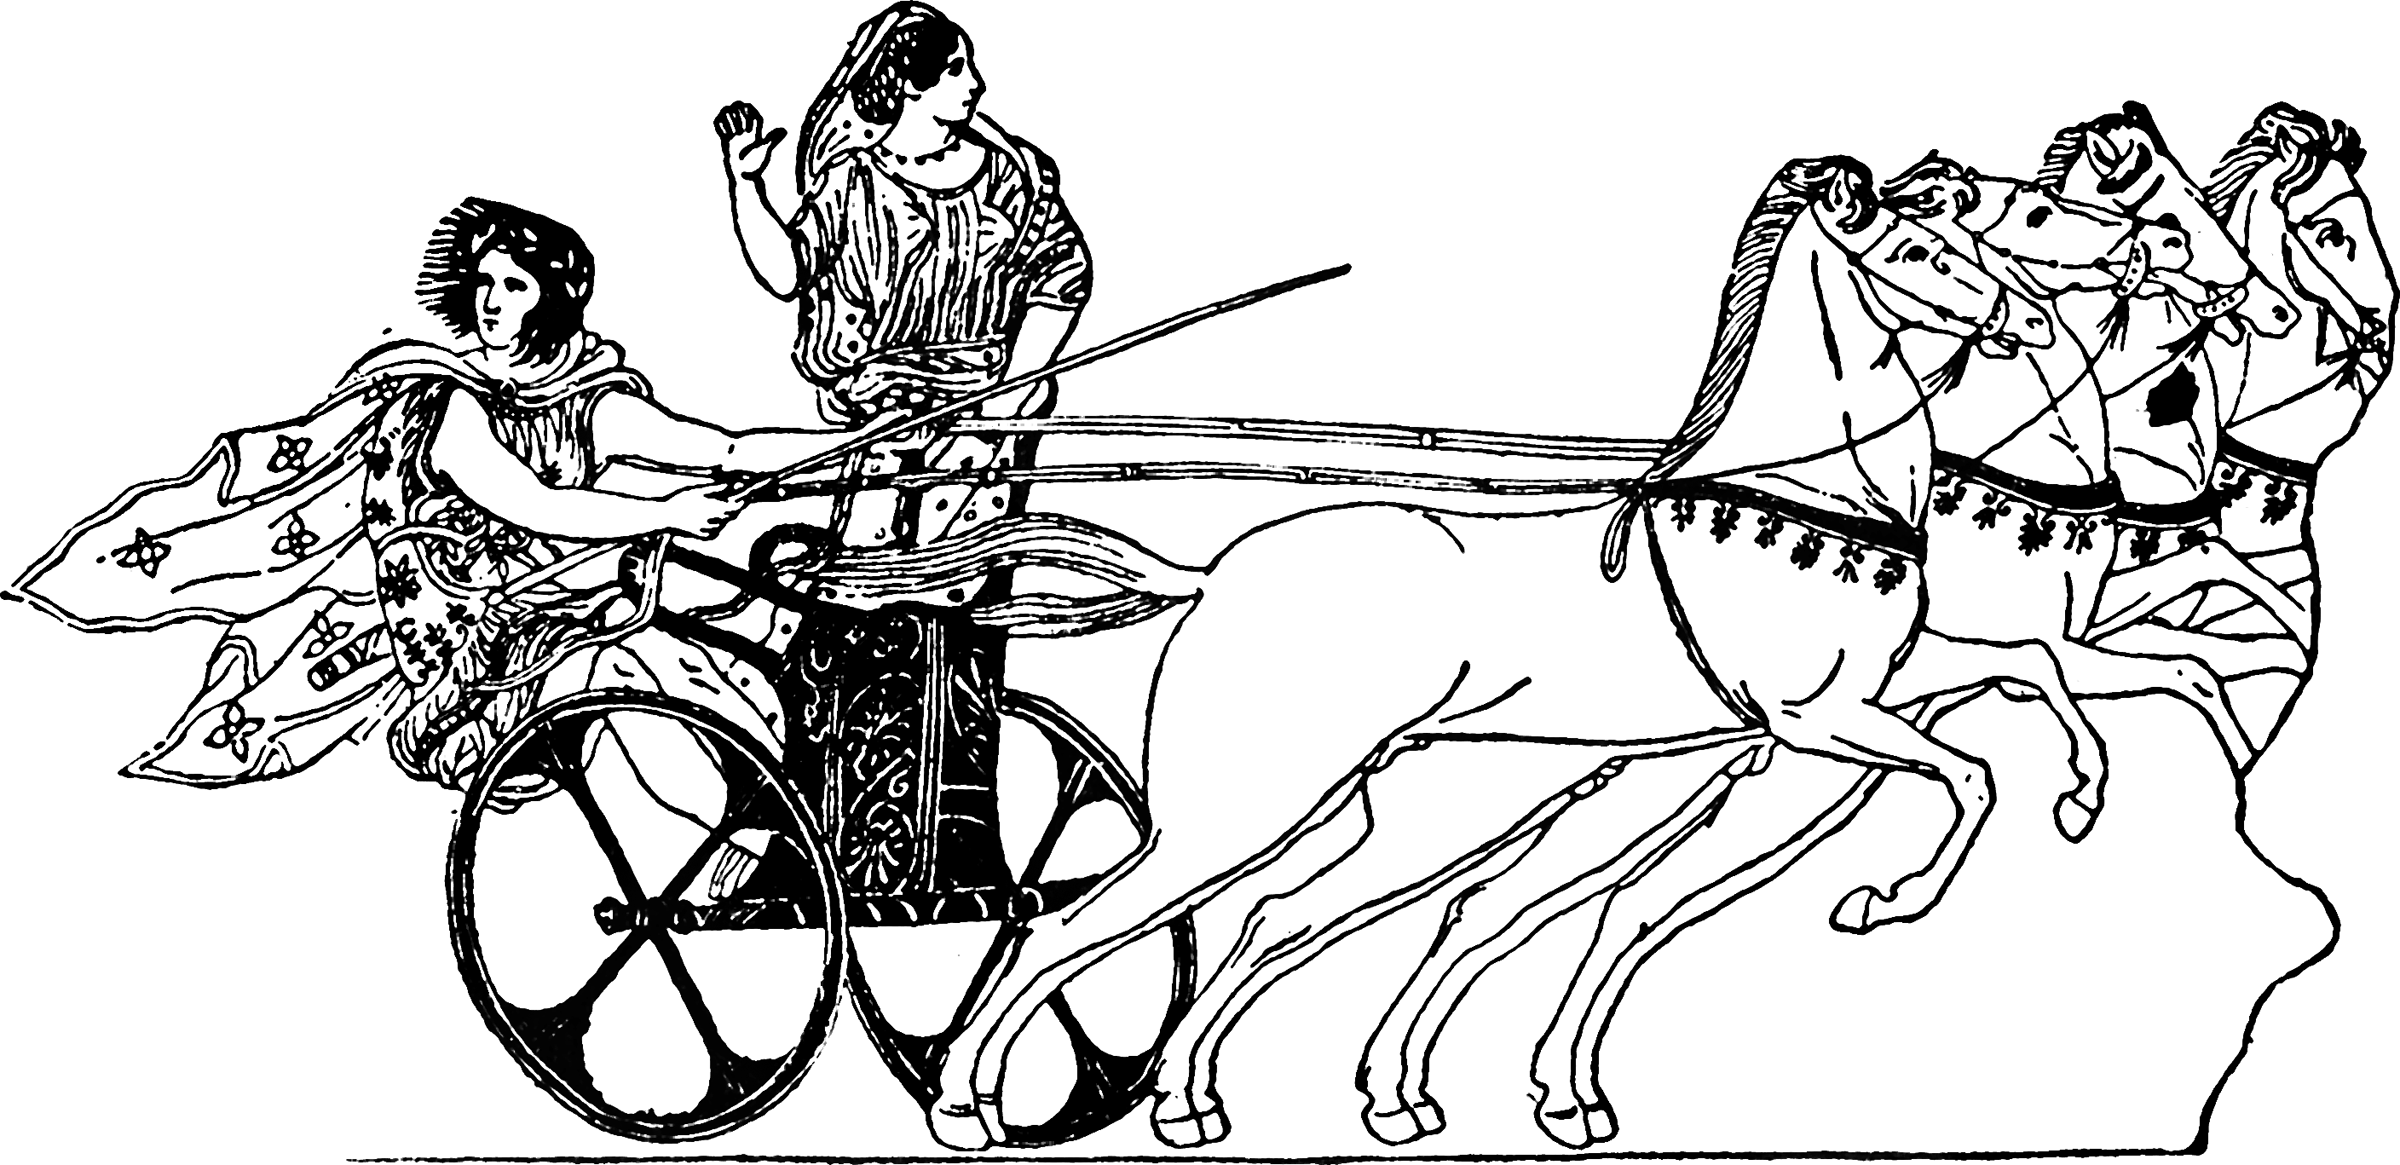 Древняя Греция олимпиада колесницы